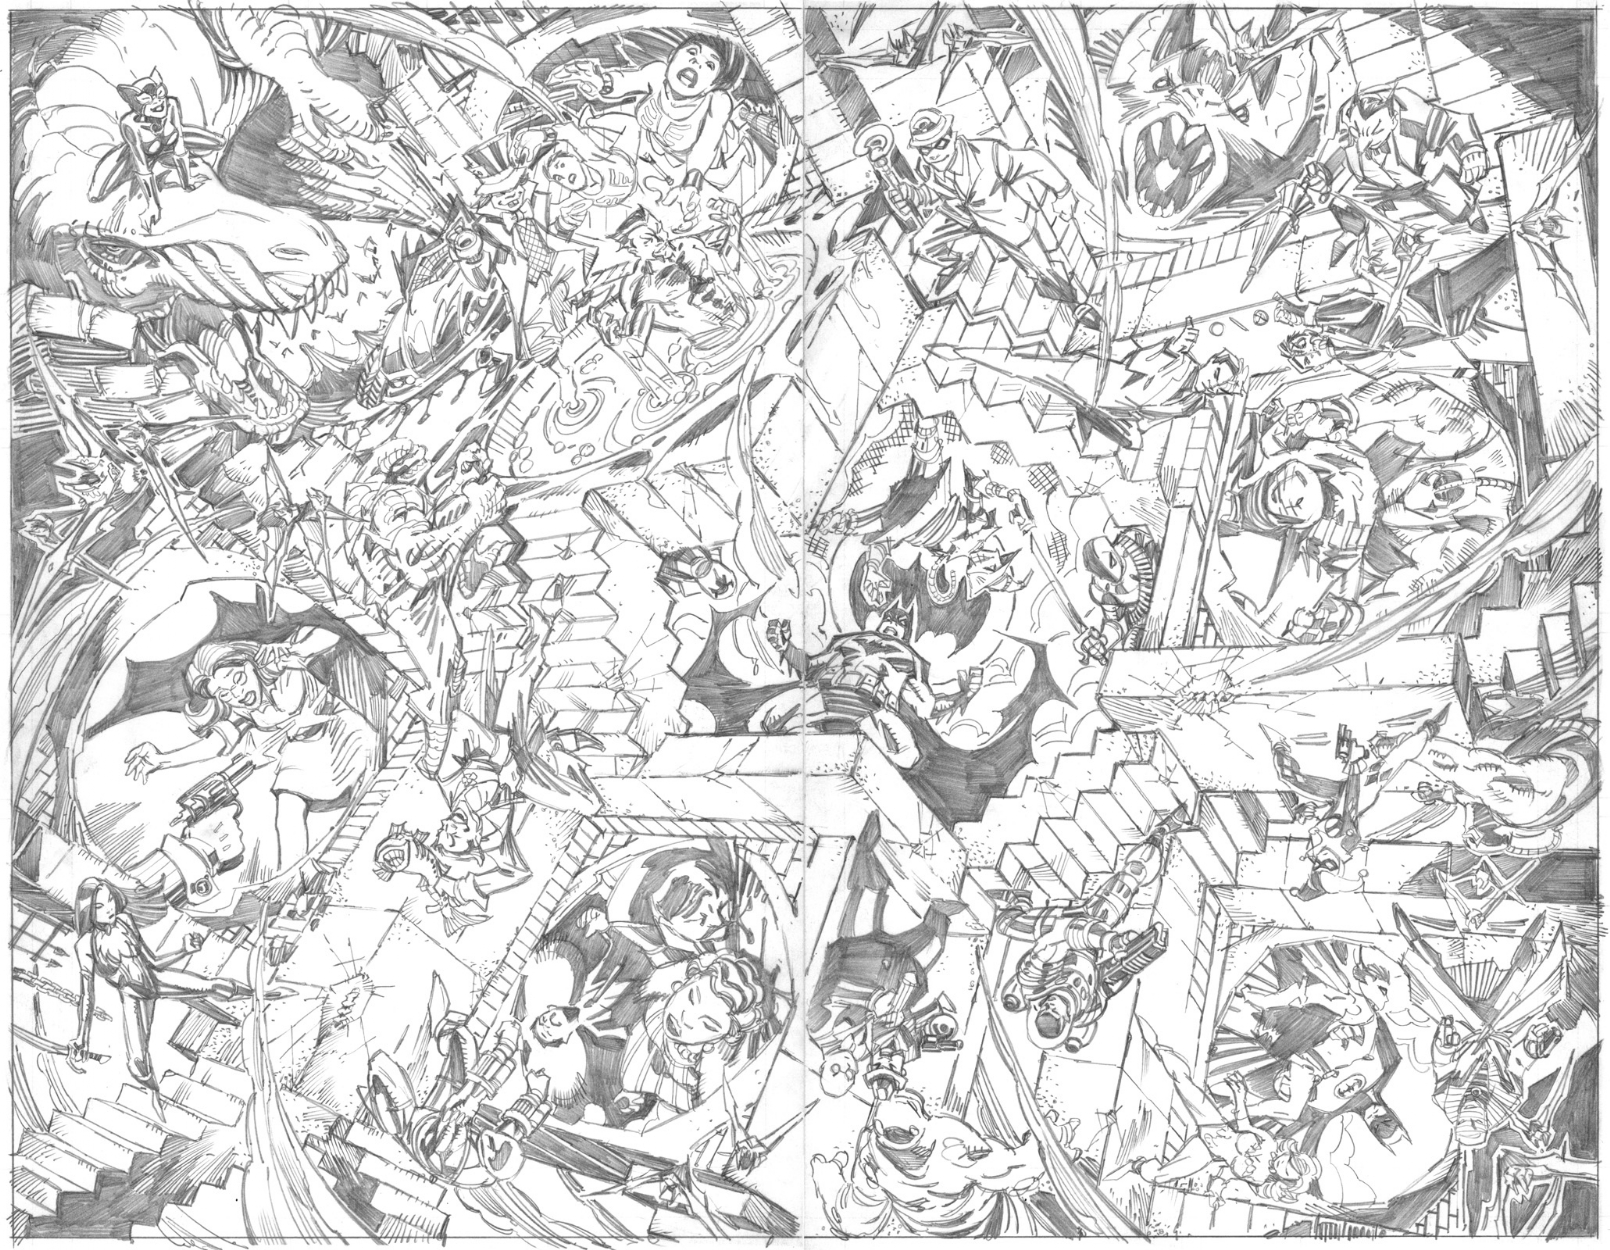 Batman Rogues Gallery w/ Joker, Harley Quinn, Penguin, Killer Croc, Bane -  Signed 11x17 Art print